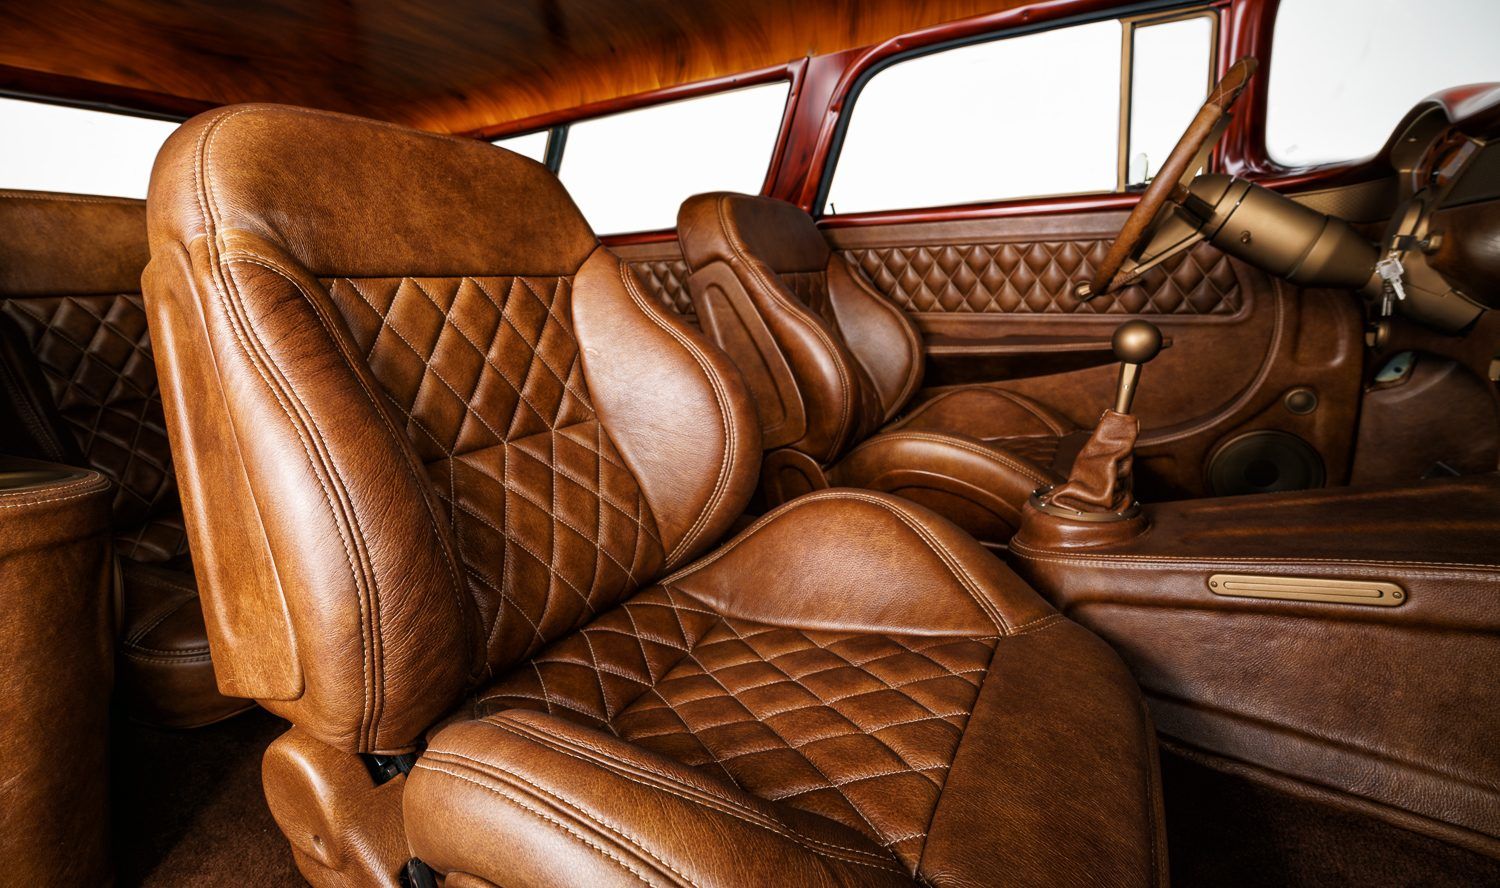 A custom interior by Classic Car Studio